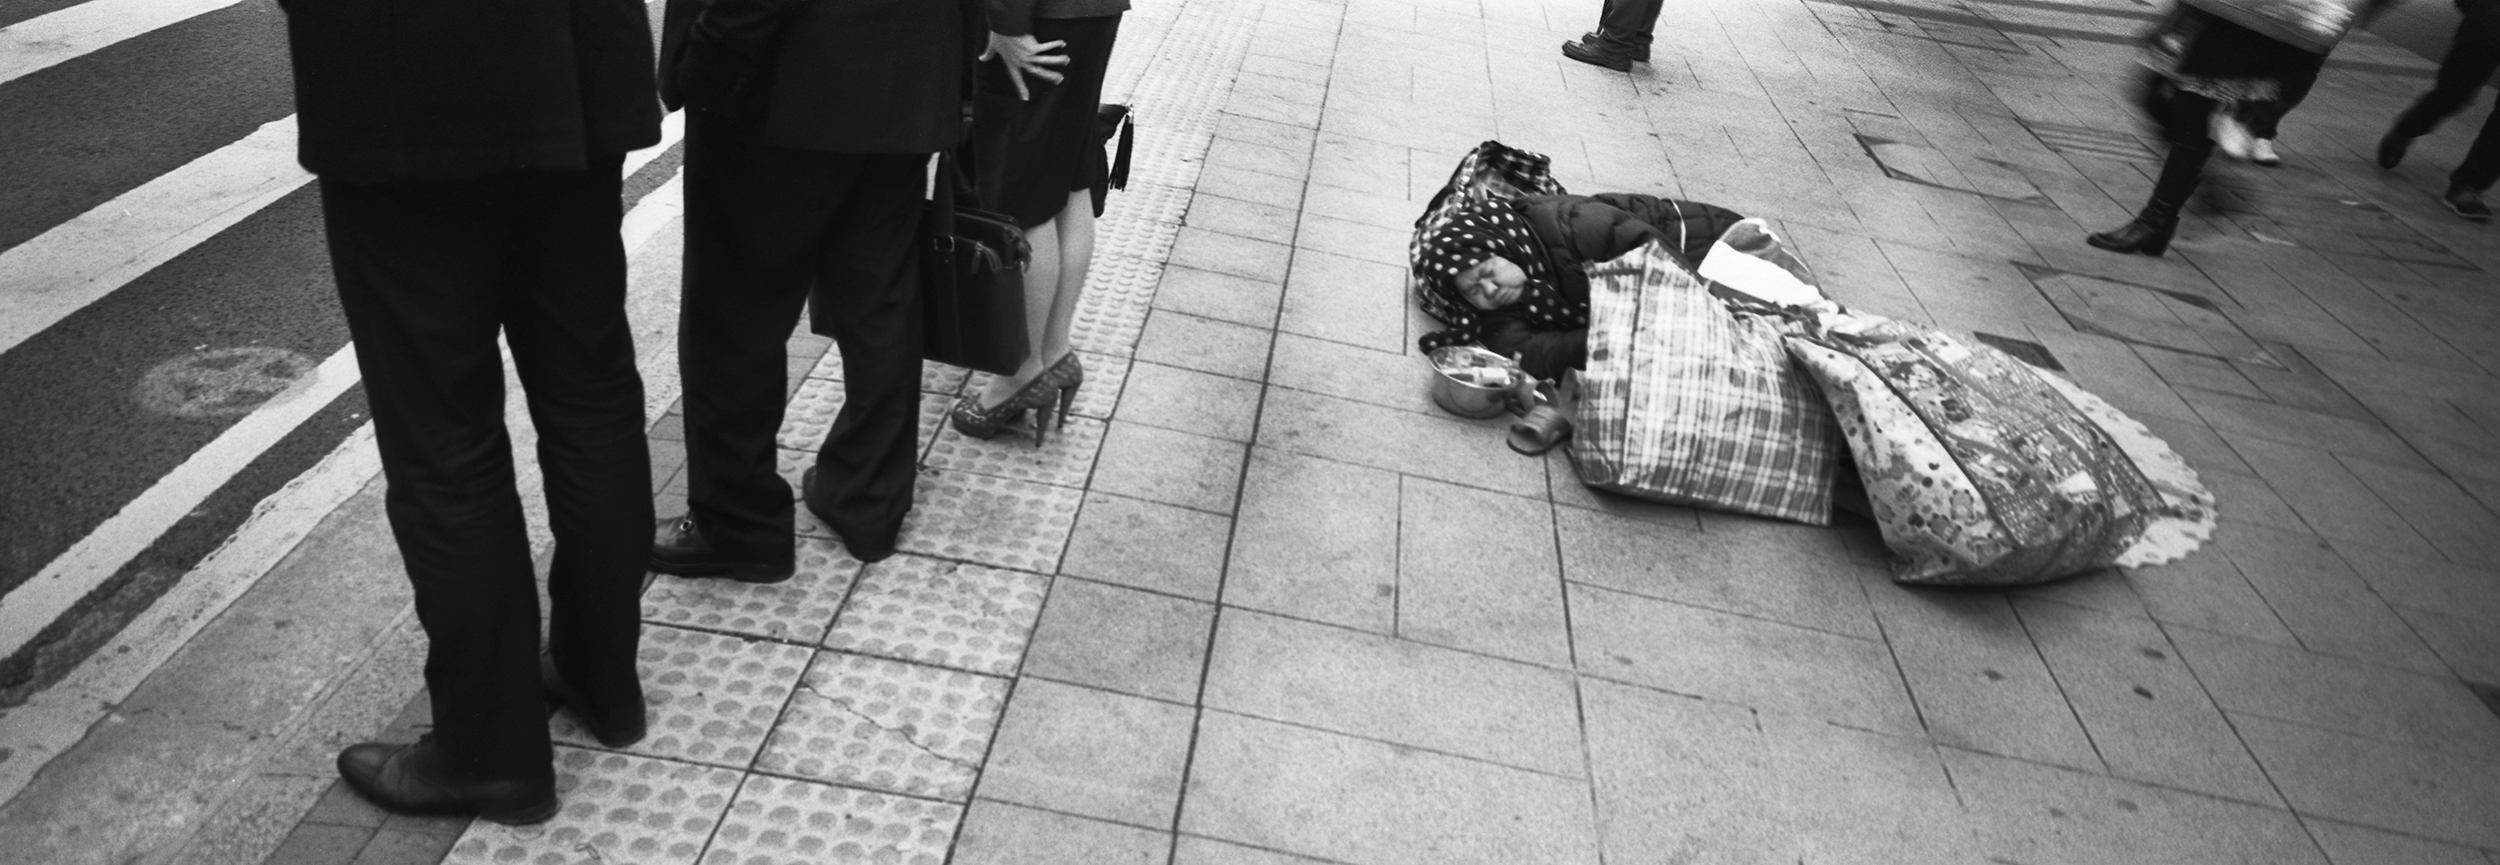   Business people and beggar. Hong Kong. 2014 